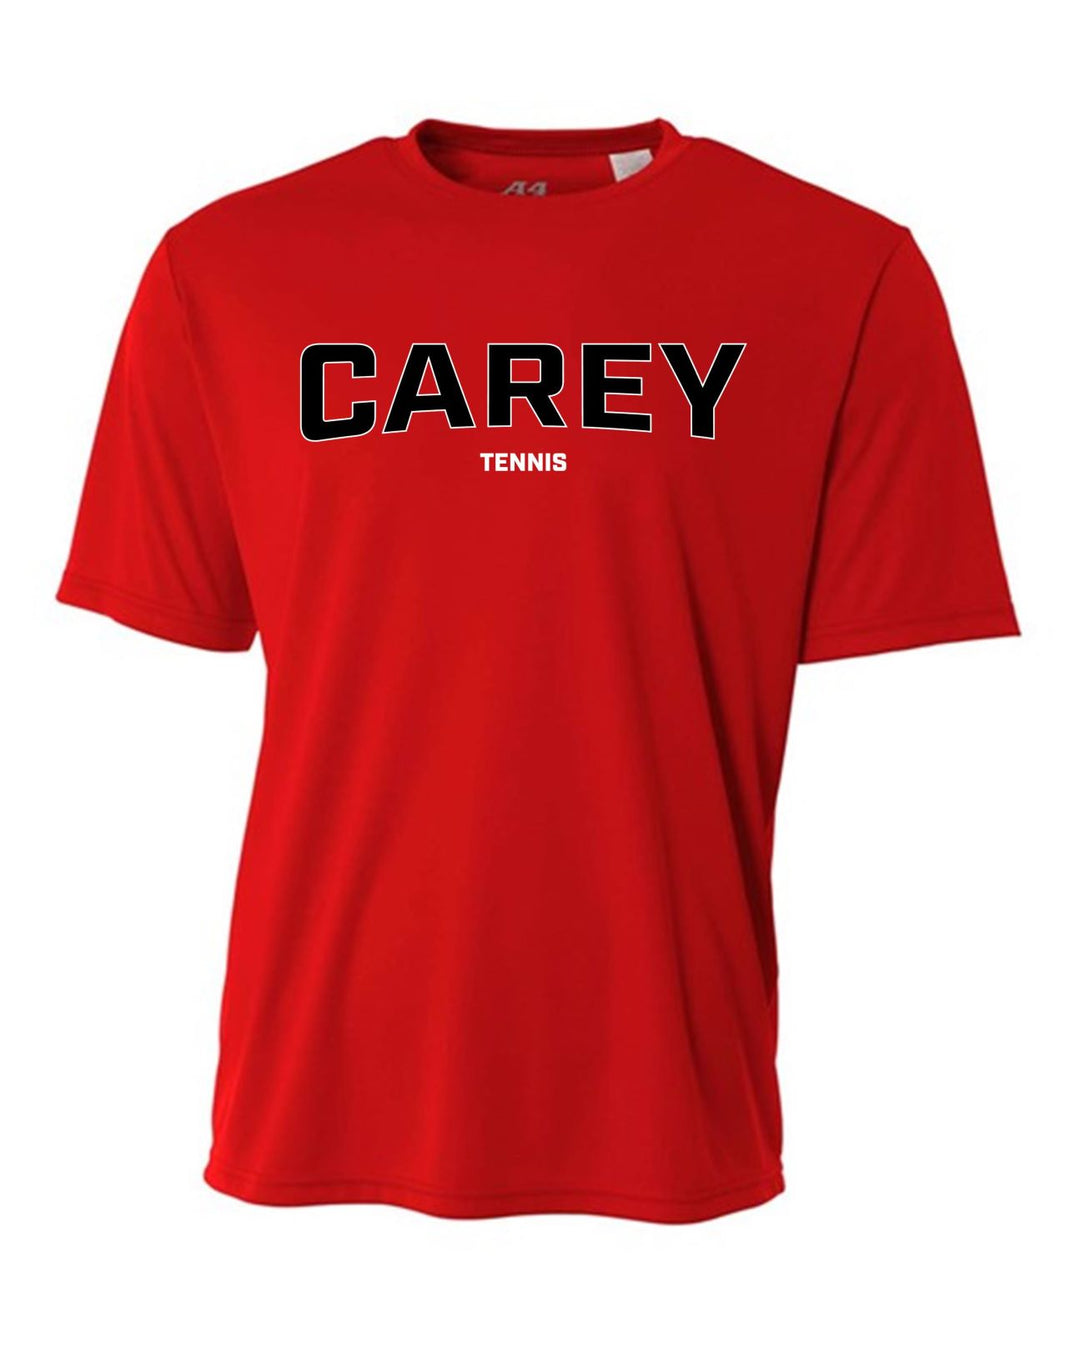 WCU Tennis Men's Short-Sleeve Performance Shirt WCU Tennis Red CAREY - Third Coast Soccer